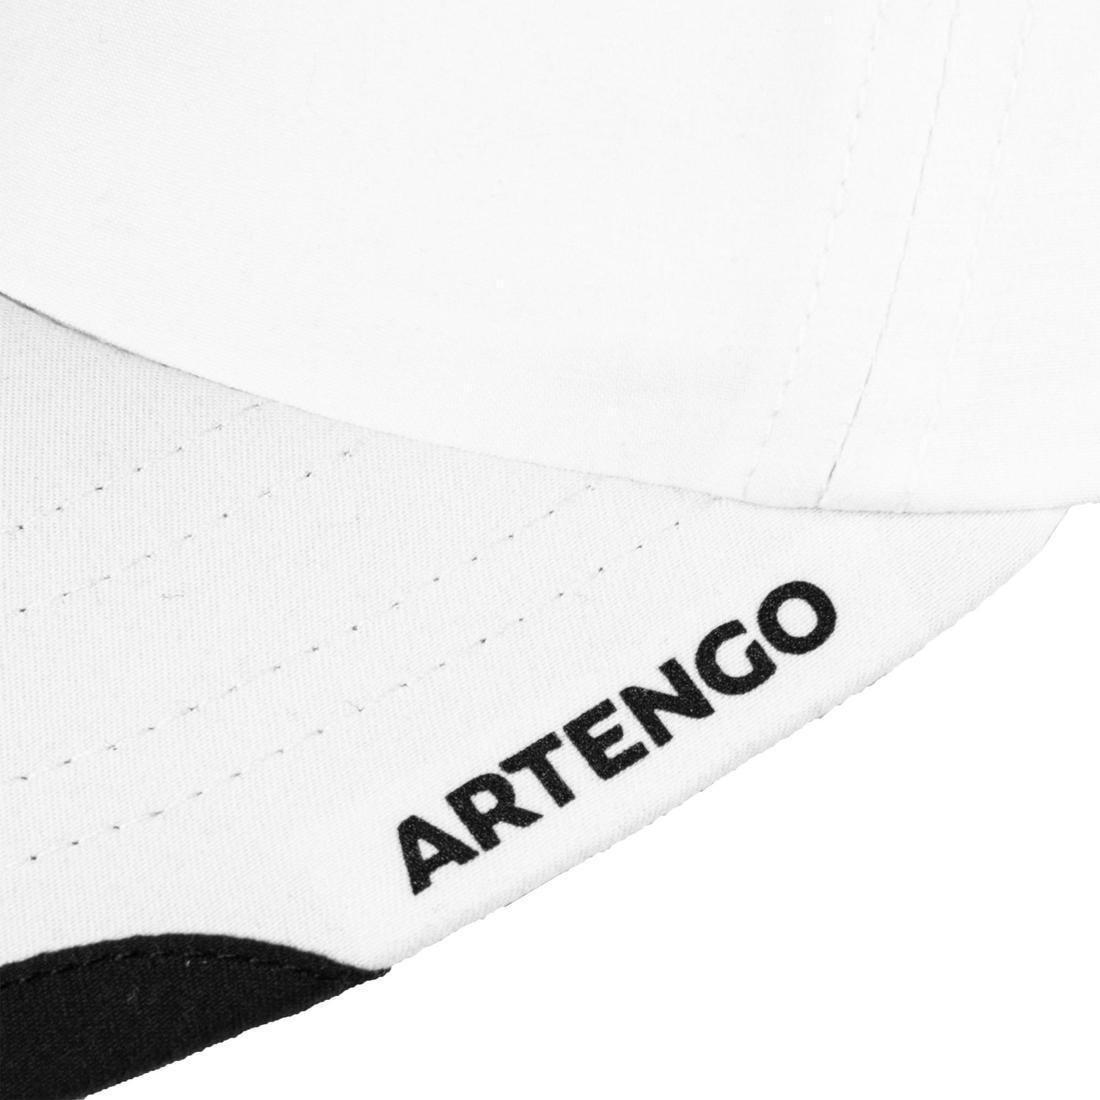 ARTENGO - Adult Flexible Tennis Cap TC 100 S58-White